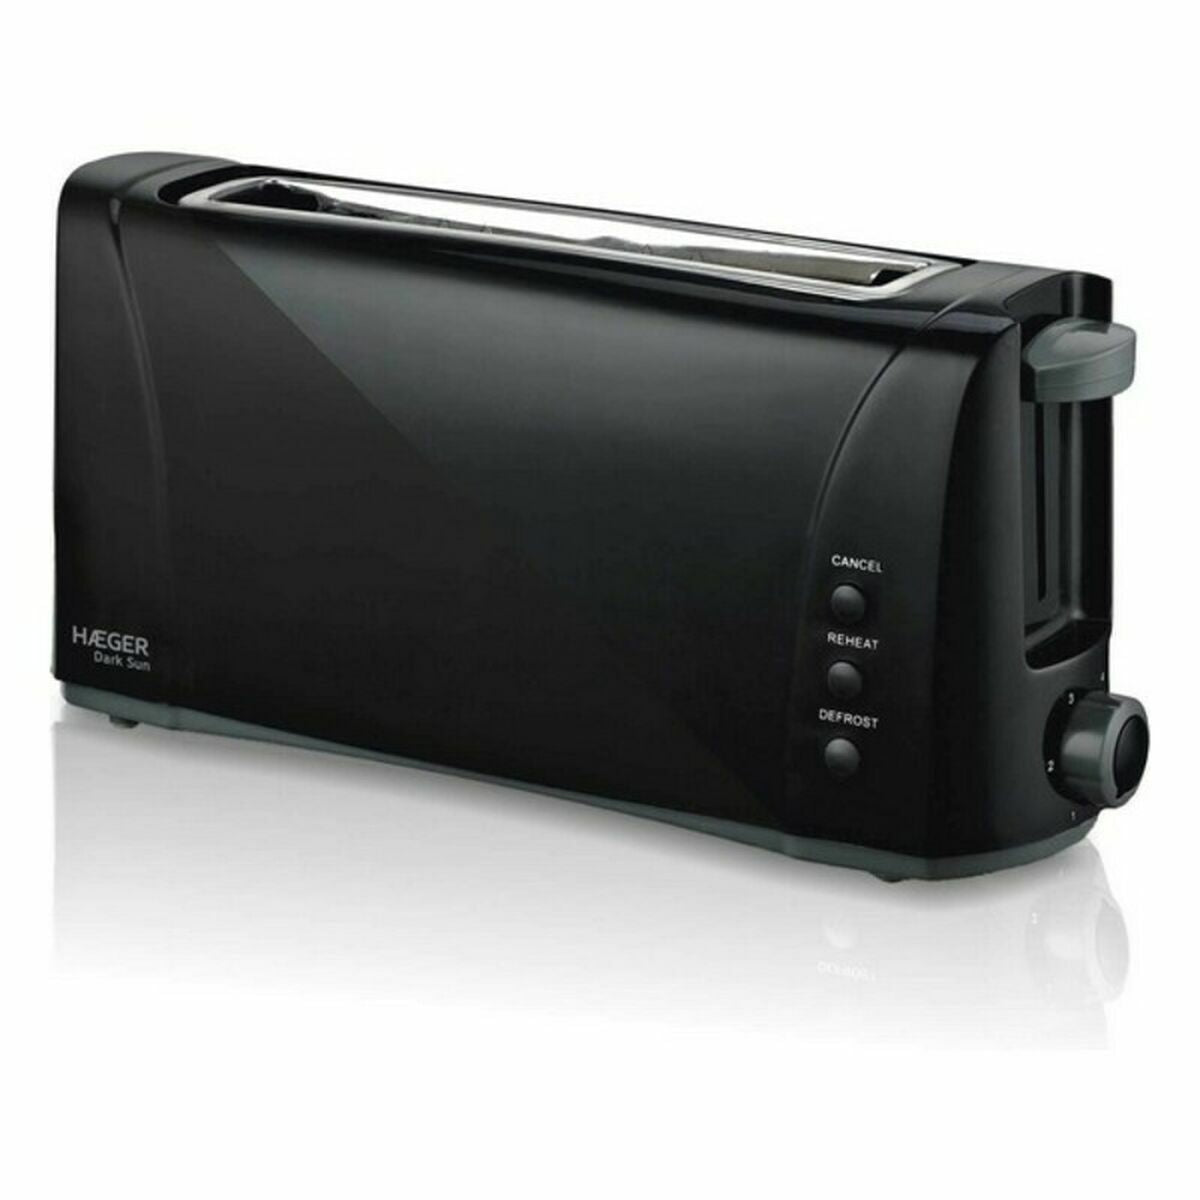 Toaster Haeger TO-100.007A 1000 W Schwarz - CA International  